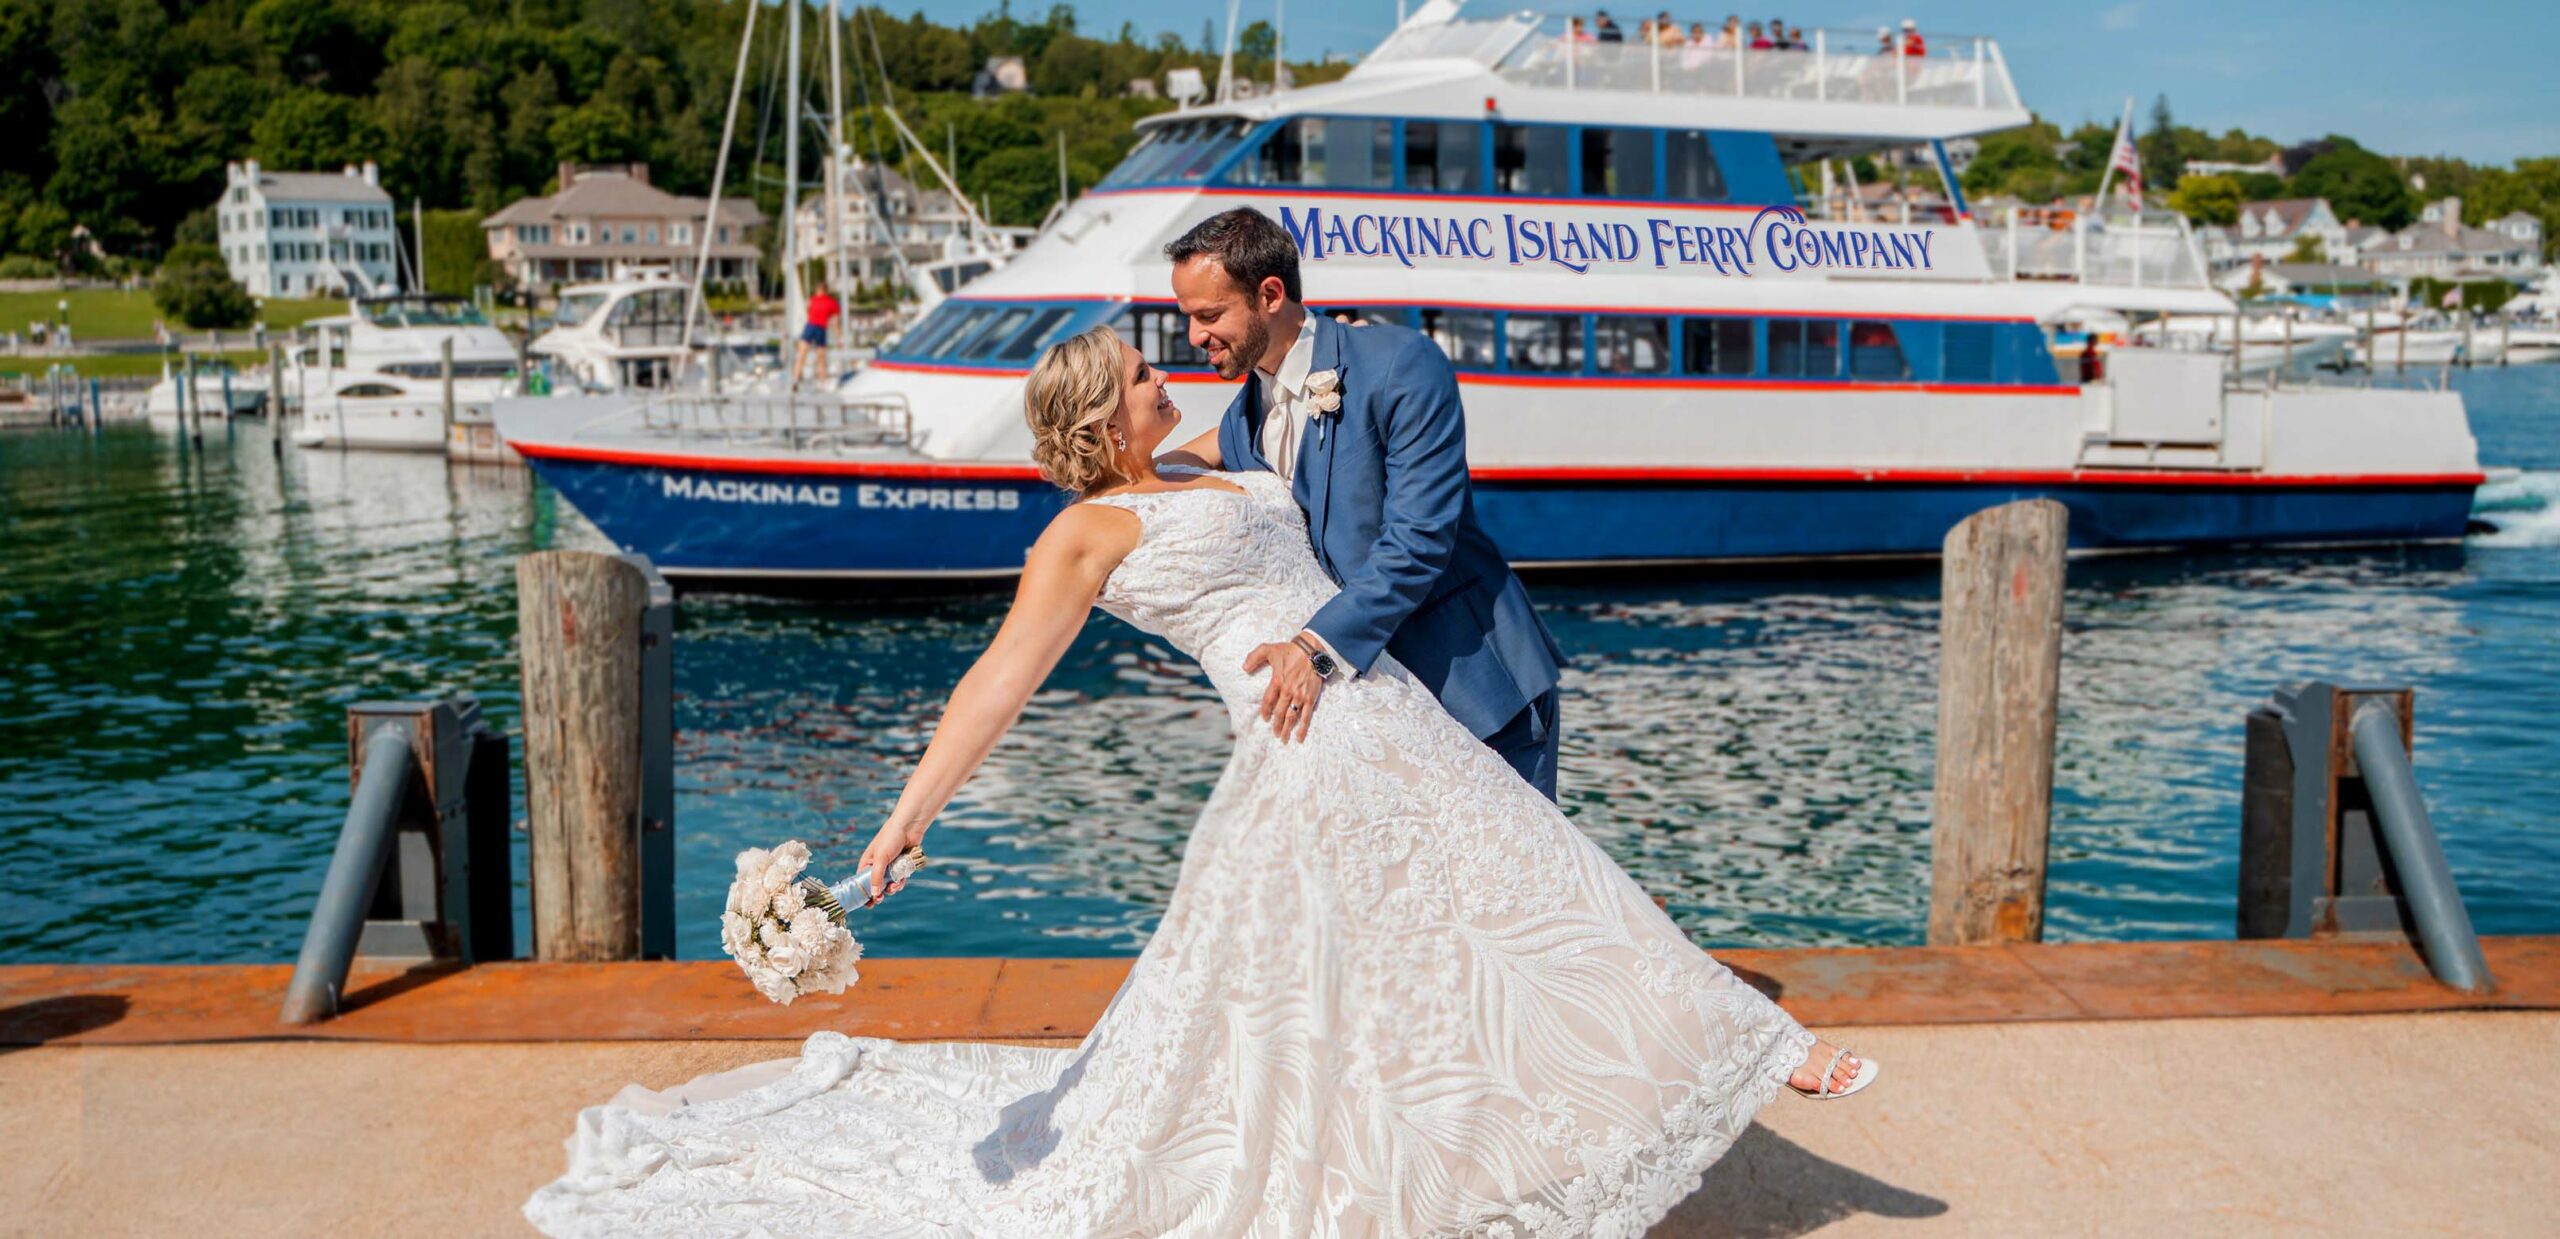 Mackinac Island Ferry Company Wedding Photo by Mackinac Express